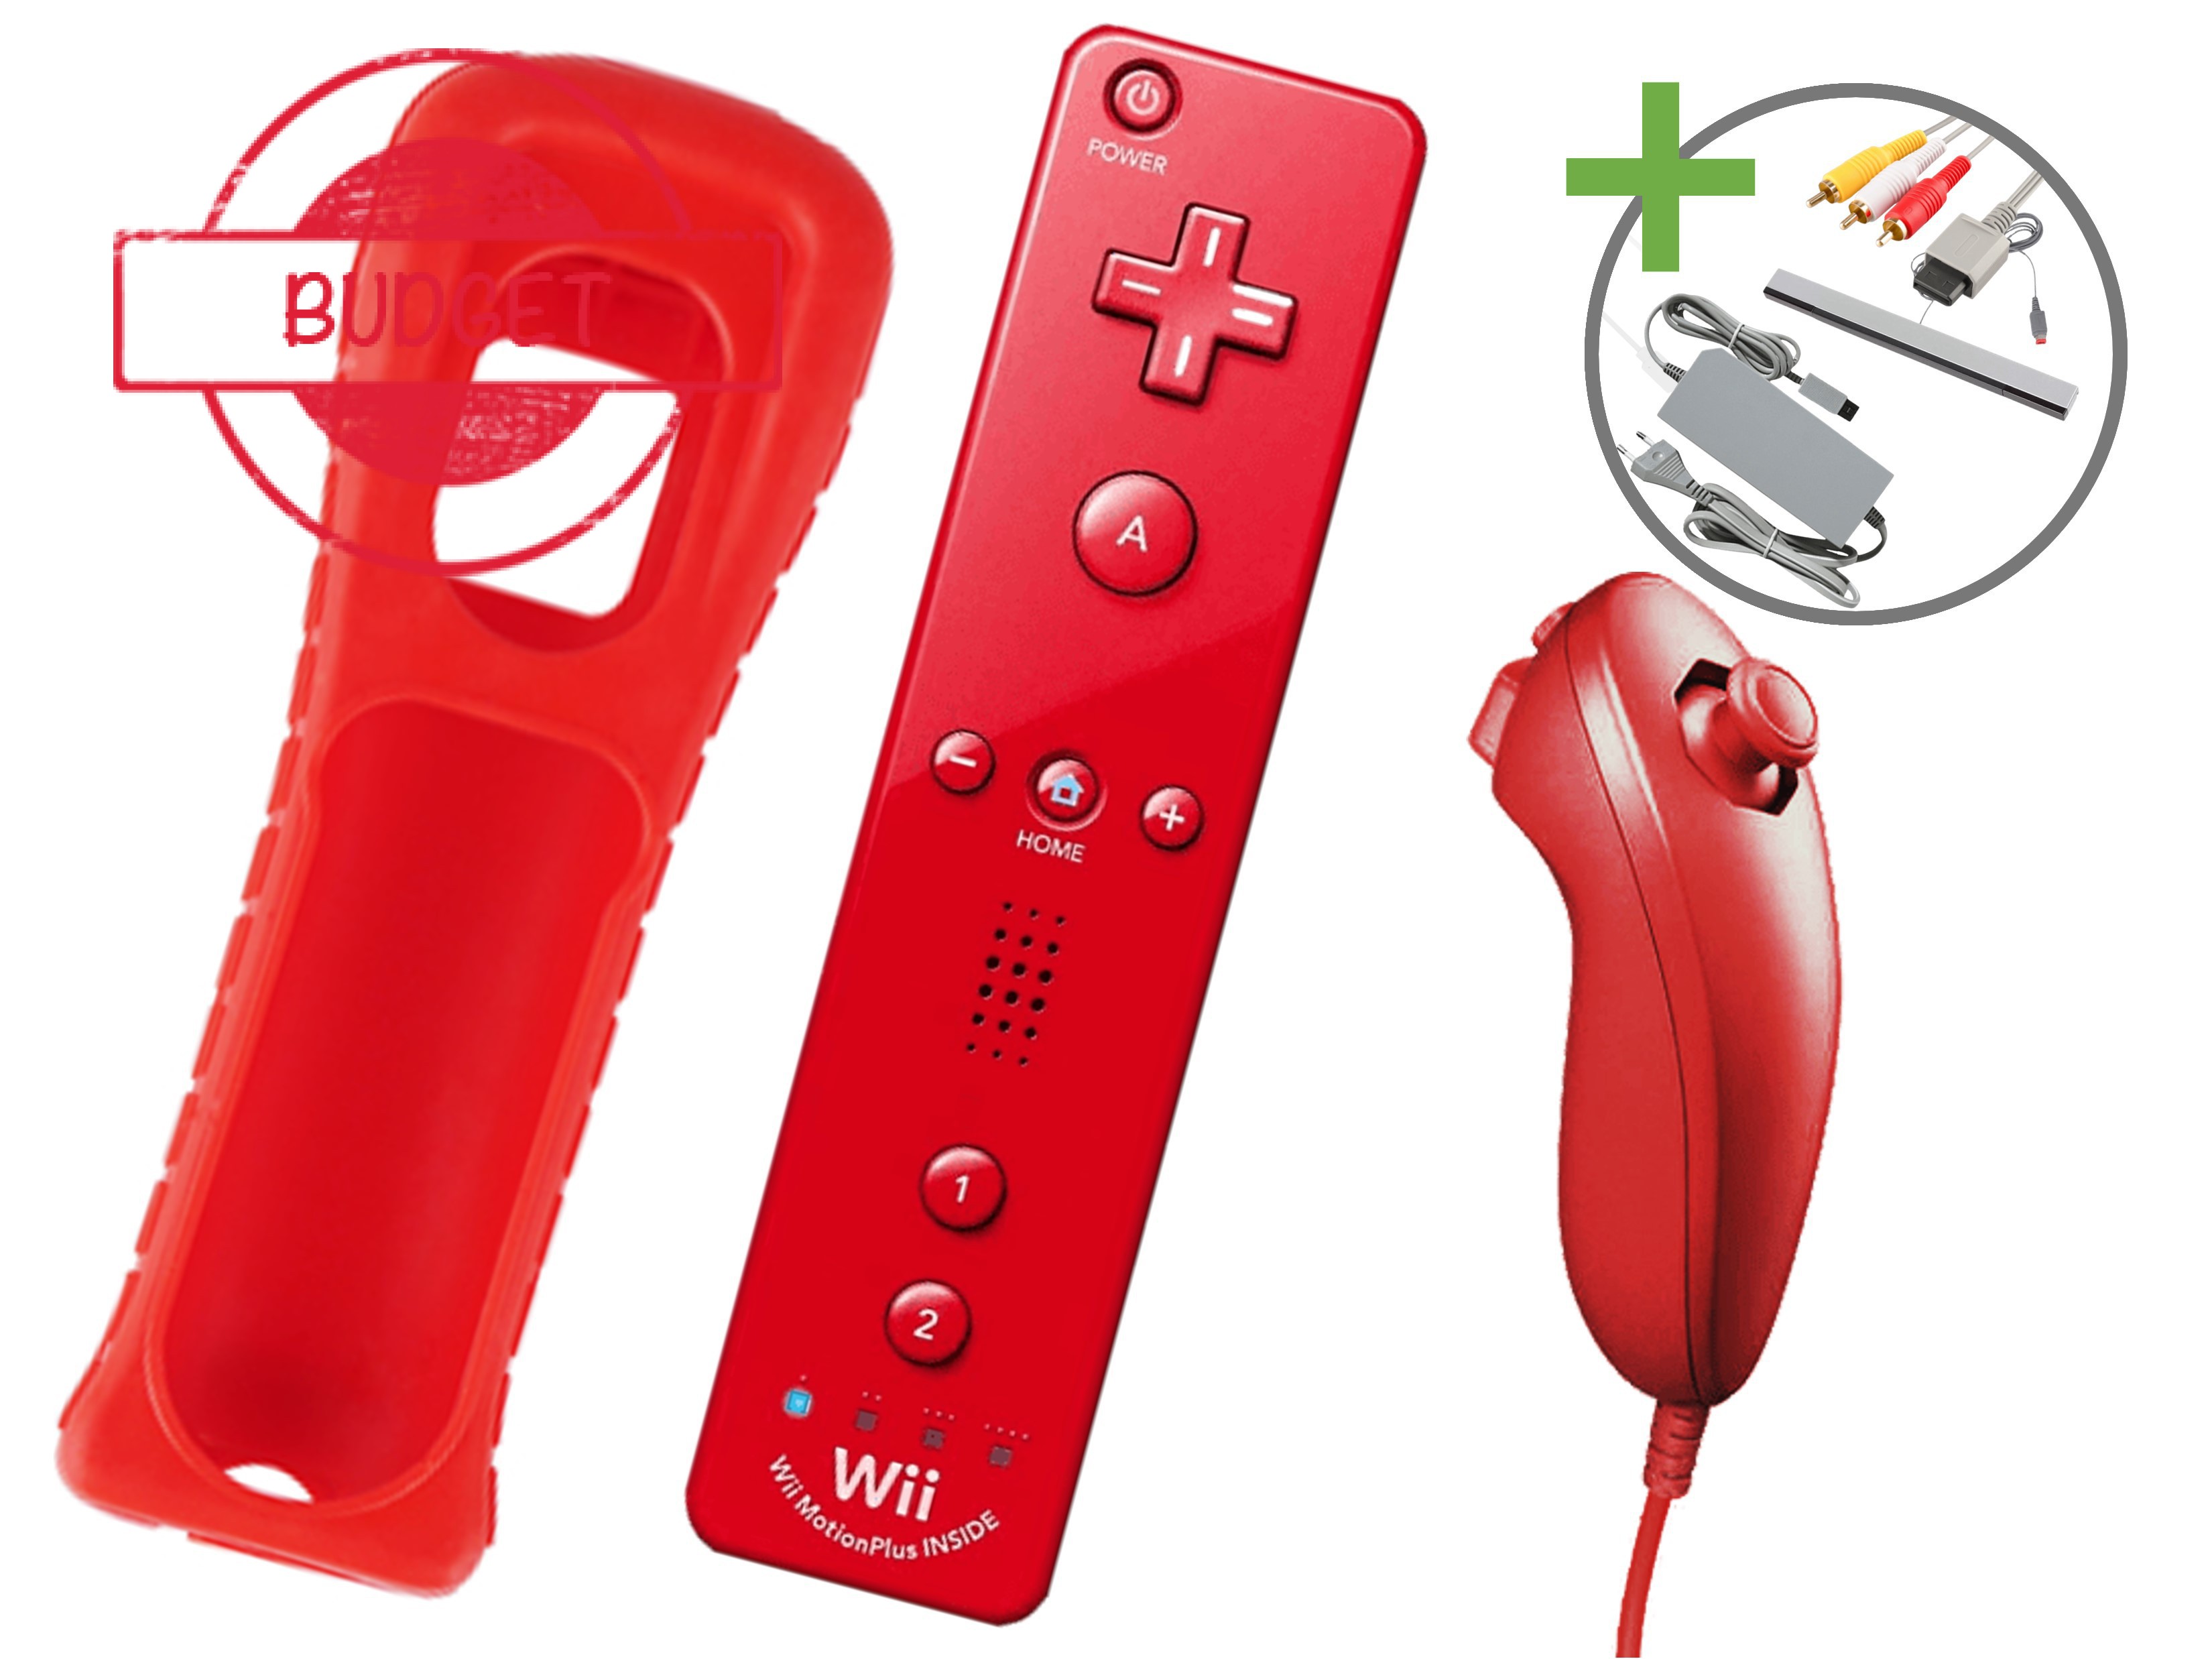 Nintendo Wii Mini Starter Pack - Mario Kart Wii Edition - Budget - Wii Hardware - 3